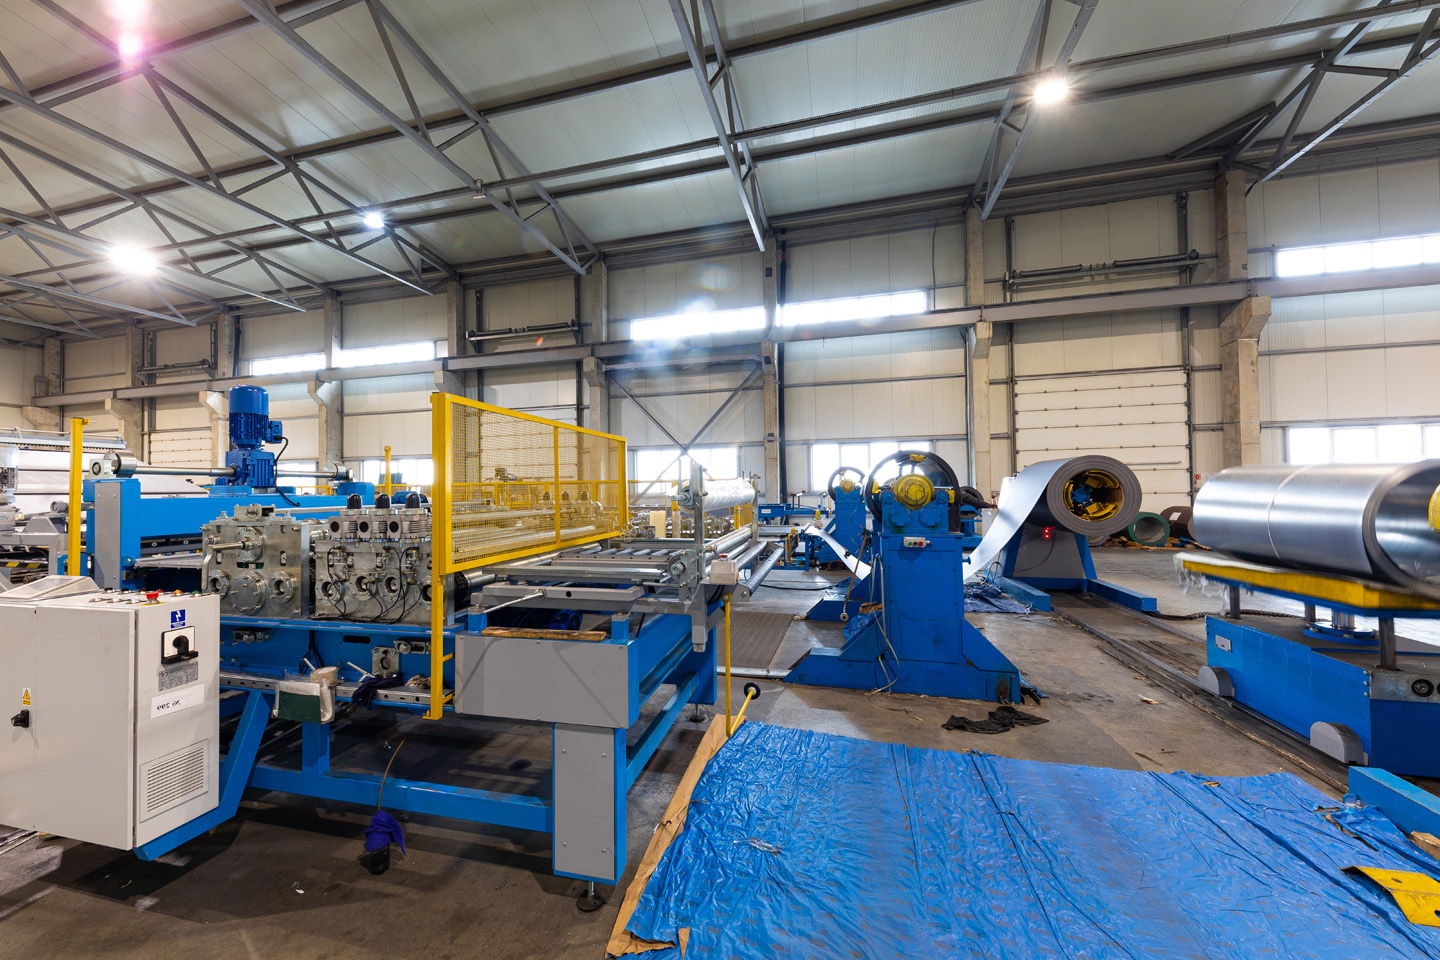 A sheet metal processing facility